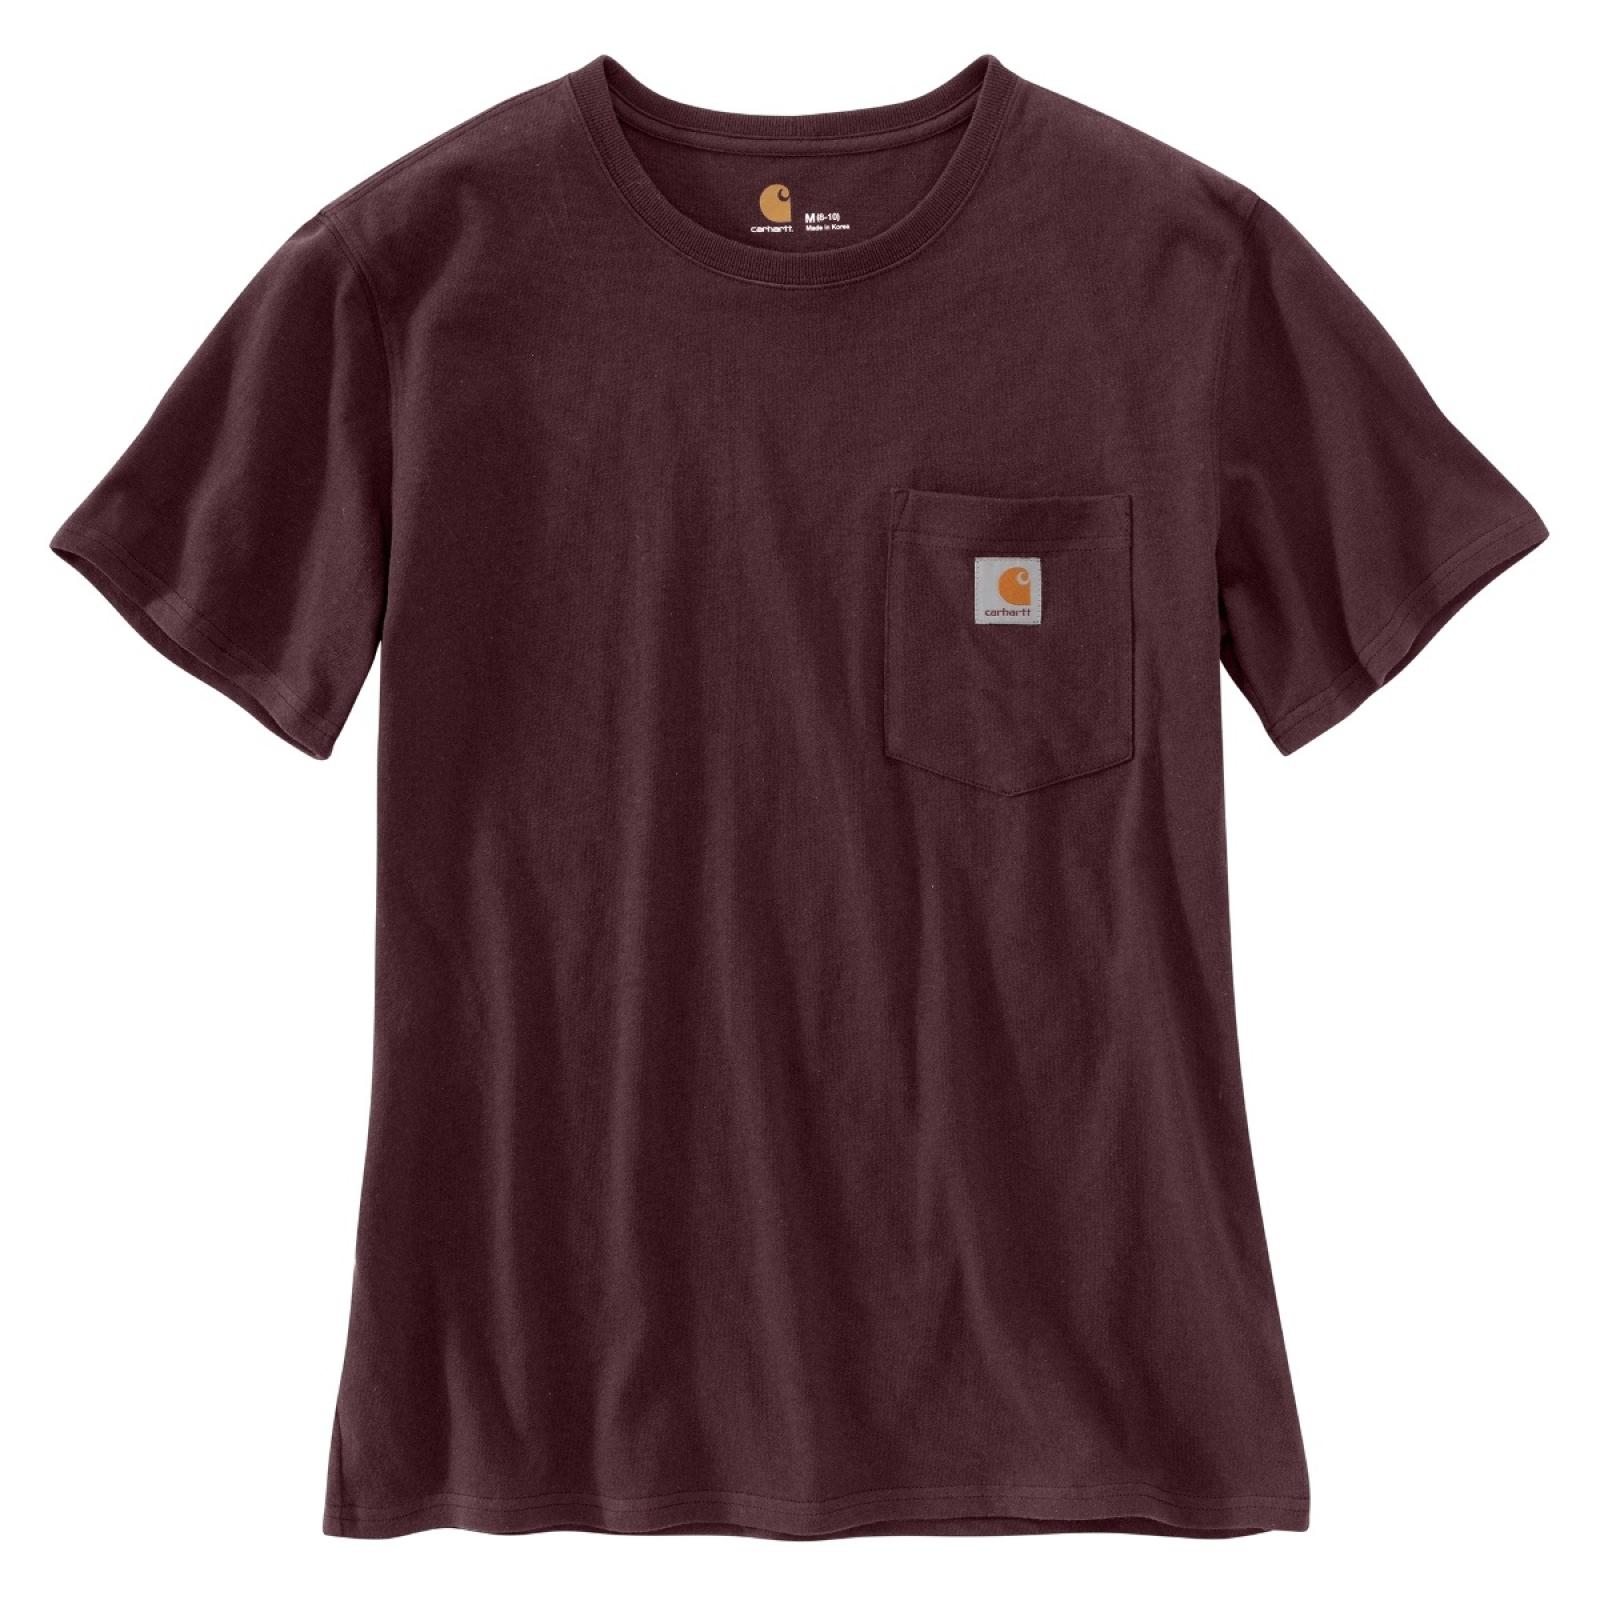 Carhartt WK87 Workwear Pocket T-Shirt